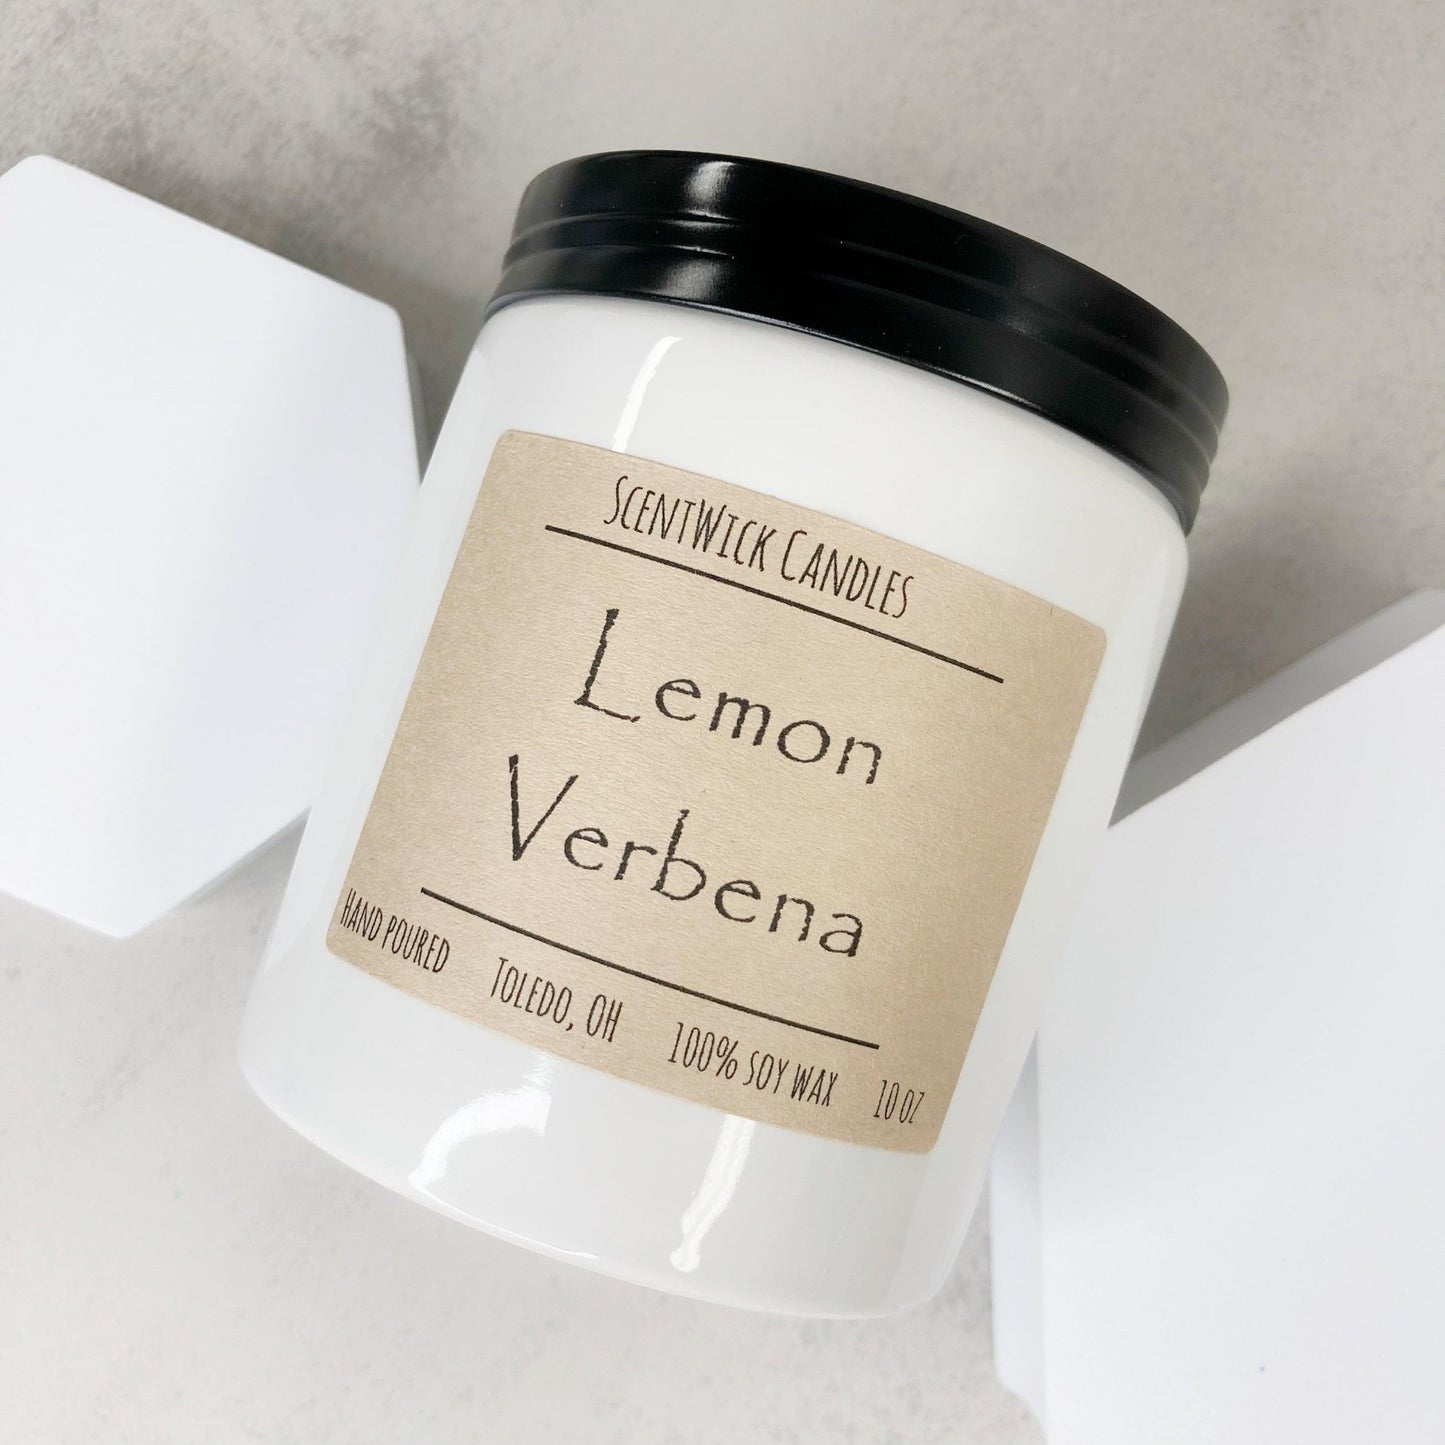 Lemon Verbena | The Farmhouse Collection - ScentWick Candles